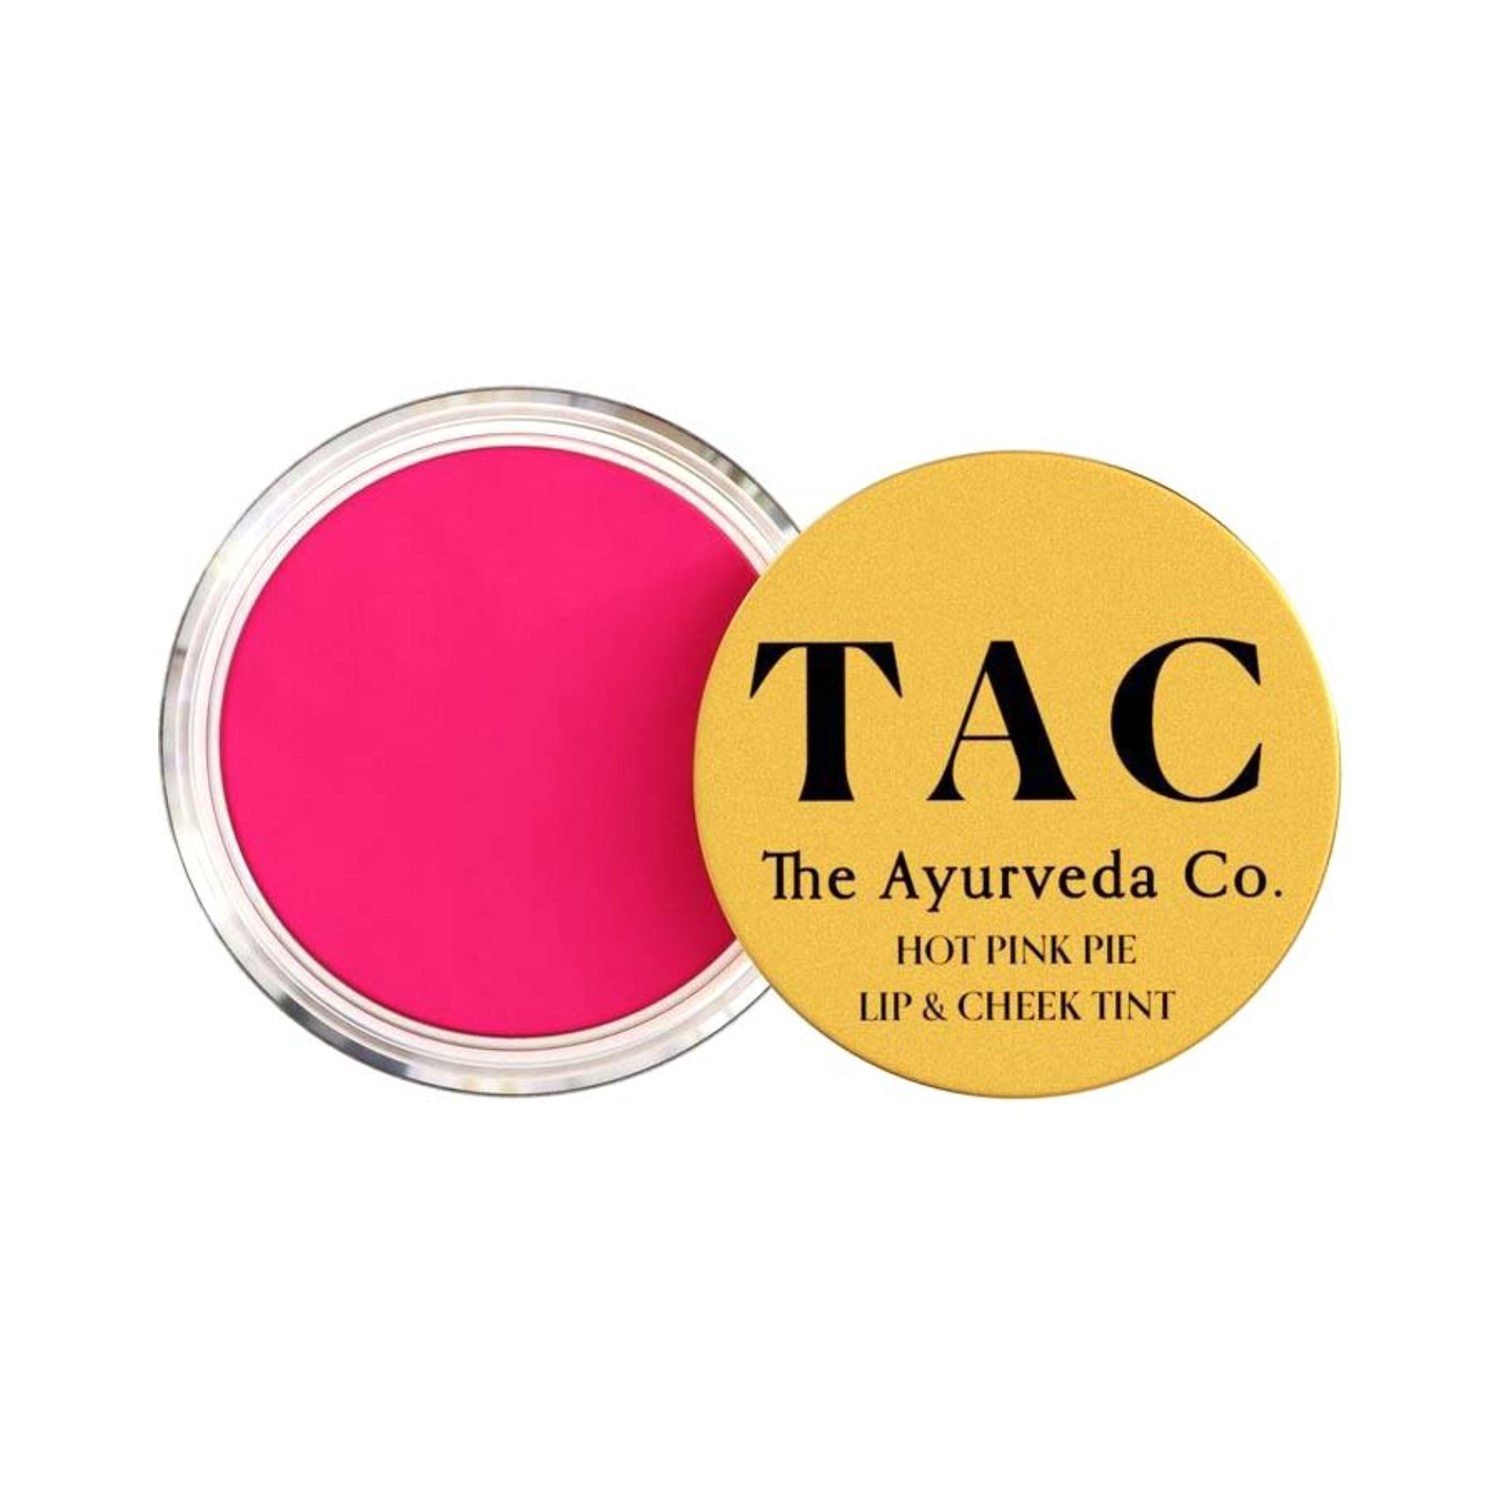 TAC - The Ayurveda Co. | TAC - The Ayurveda Co. Lip & Cheek Tint - Hot Pink Pie (10g)